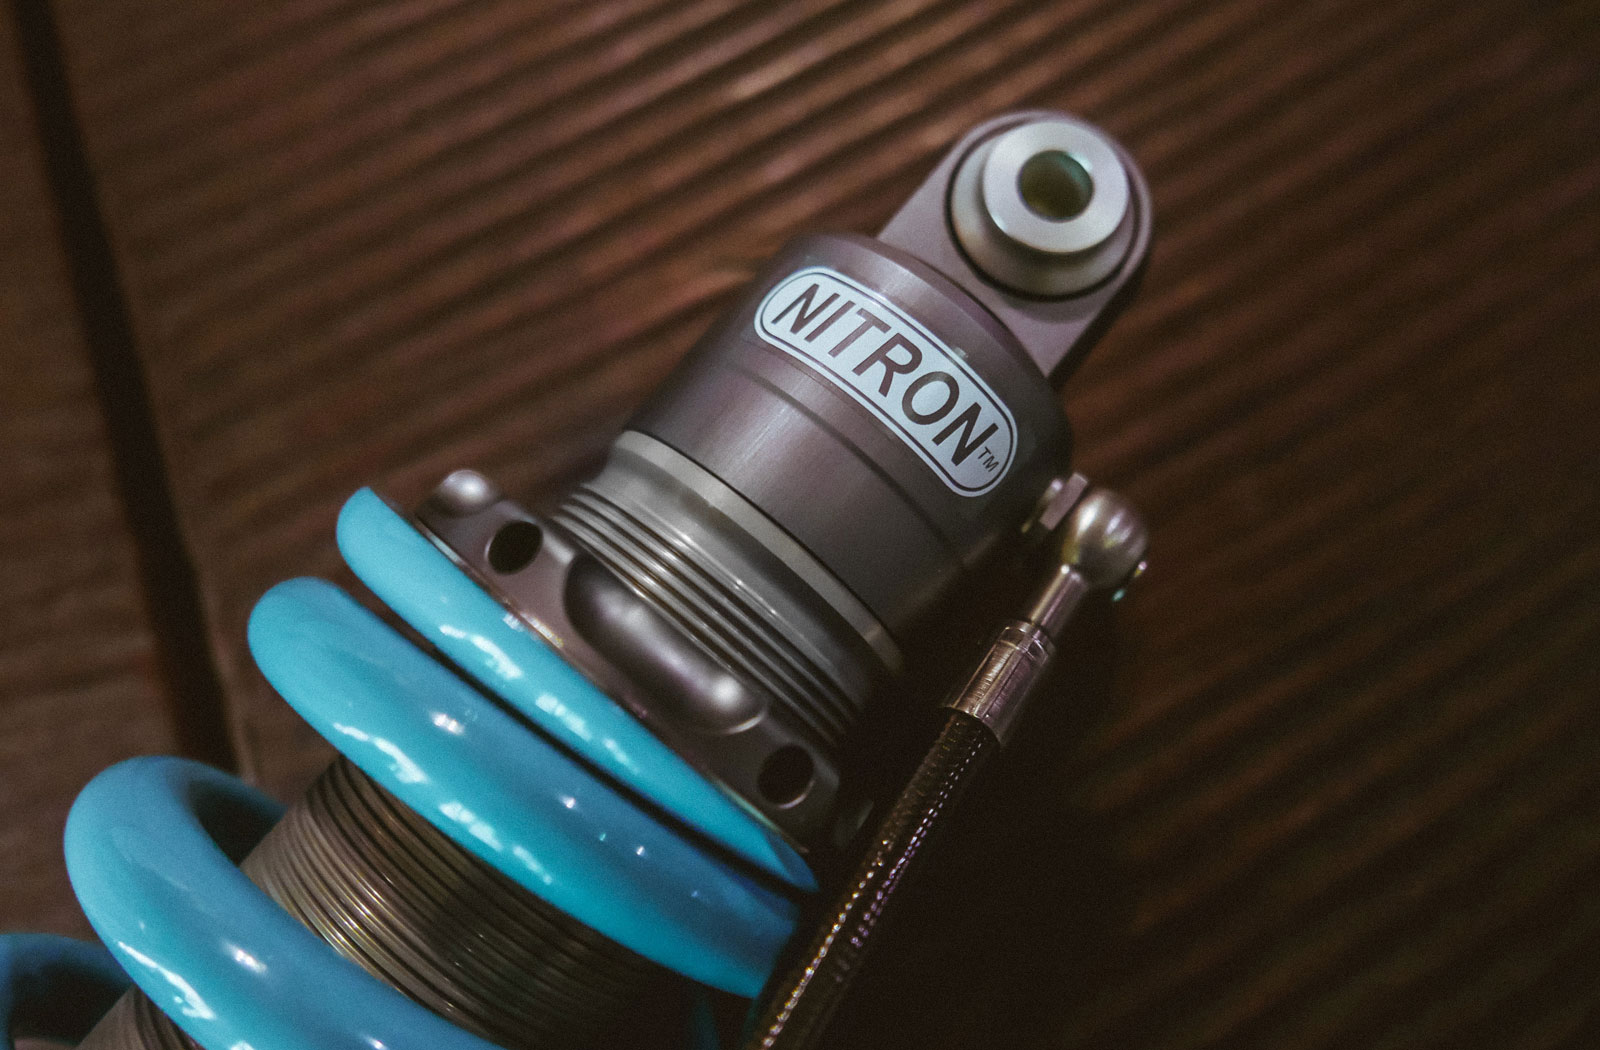 Nitron NTR R2 mono-shock